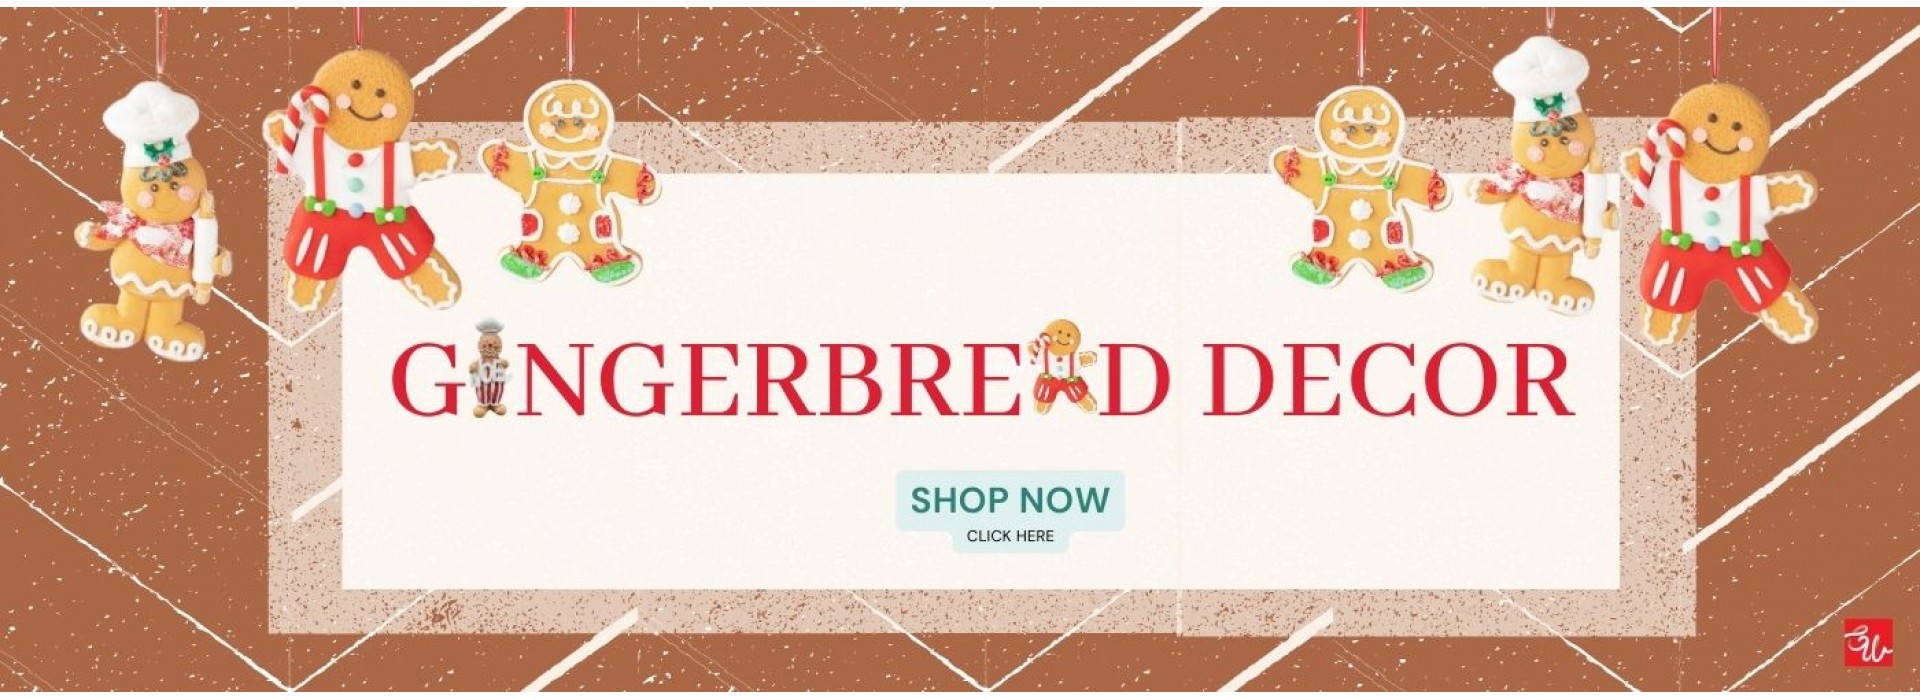 Gingerbread Decor